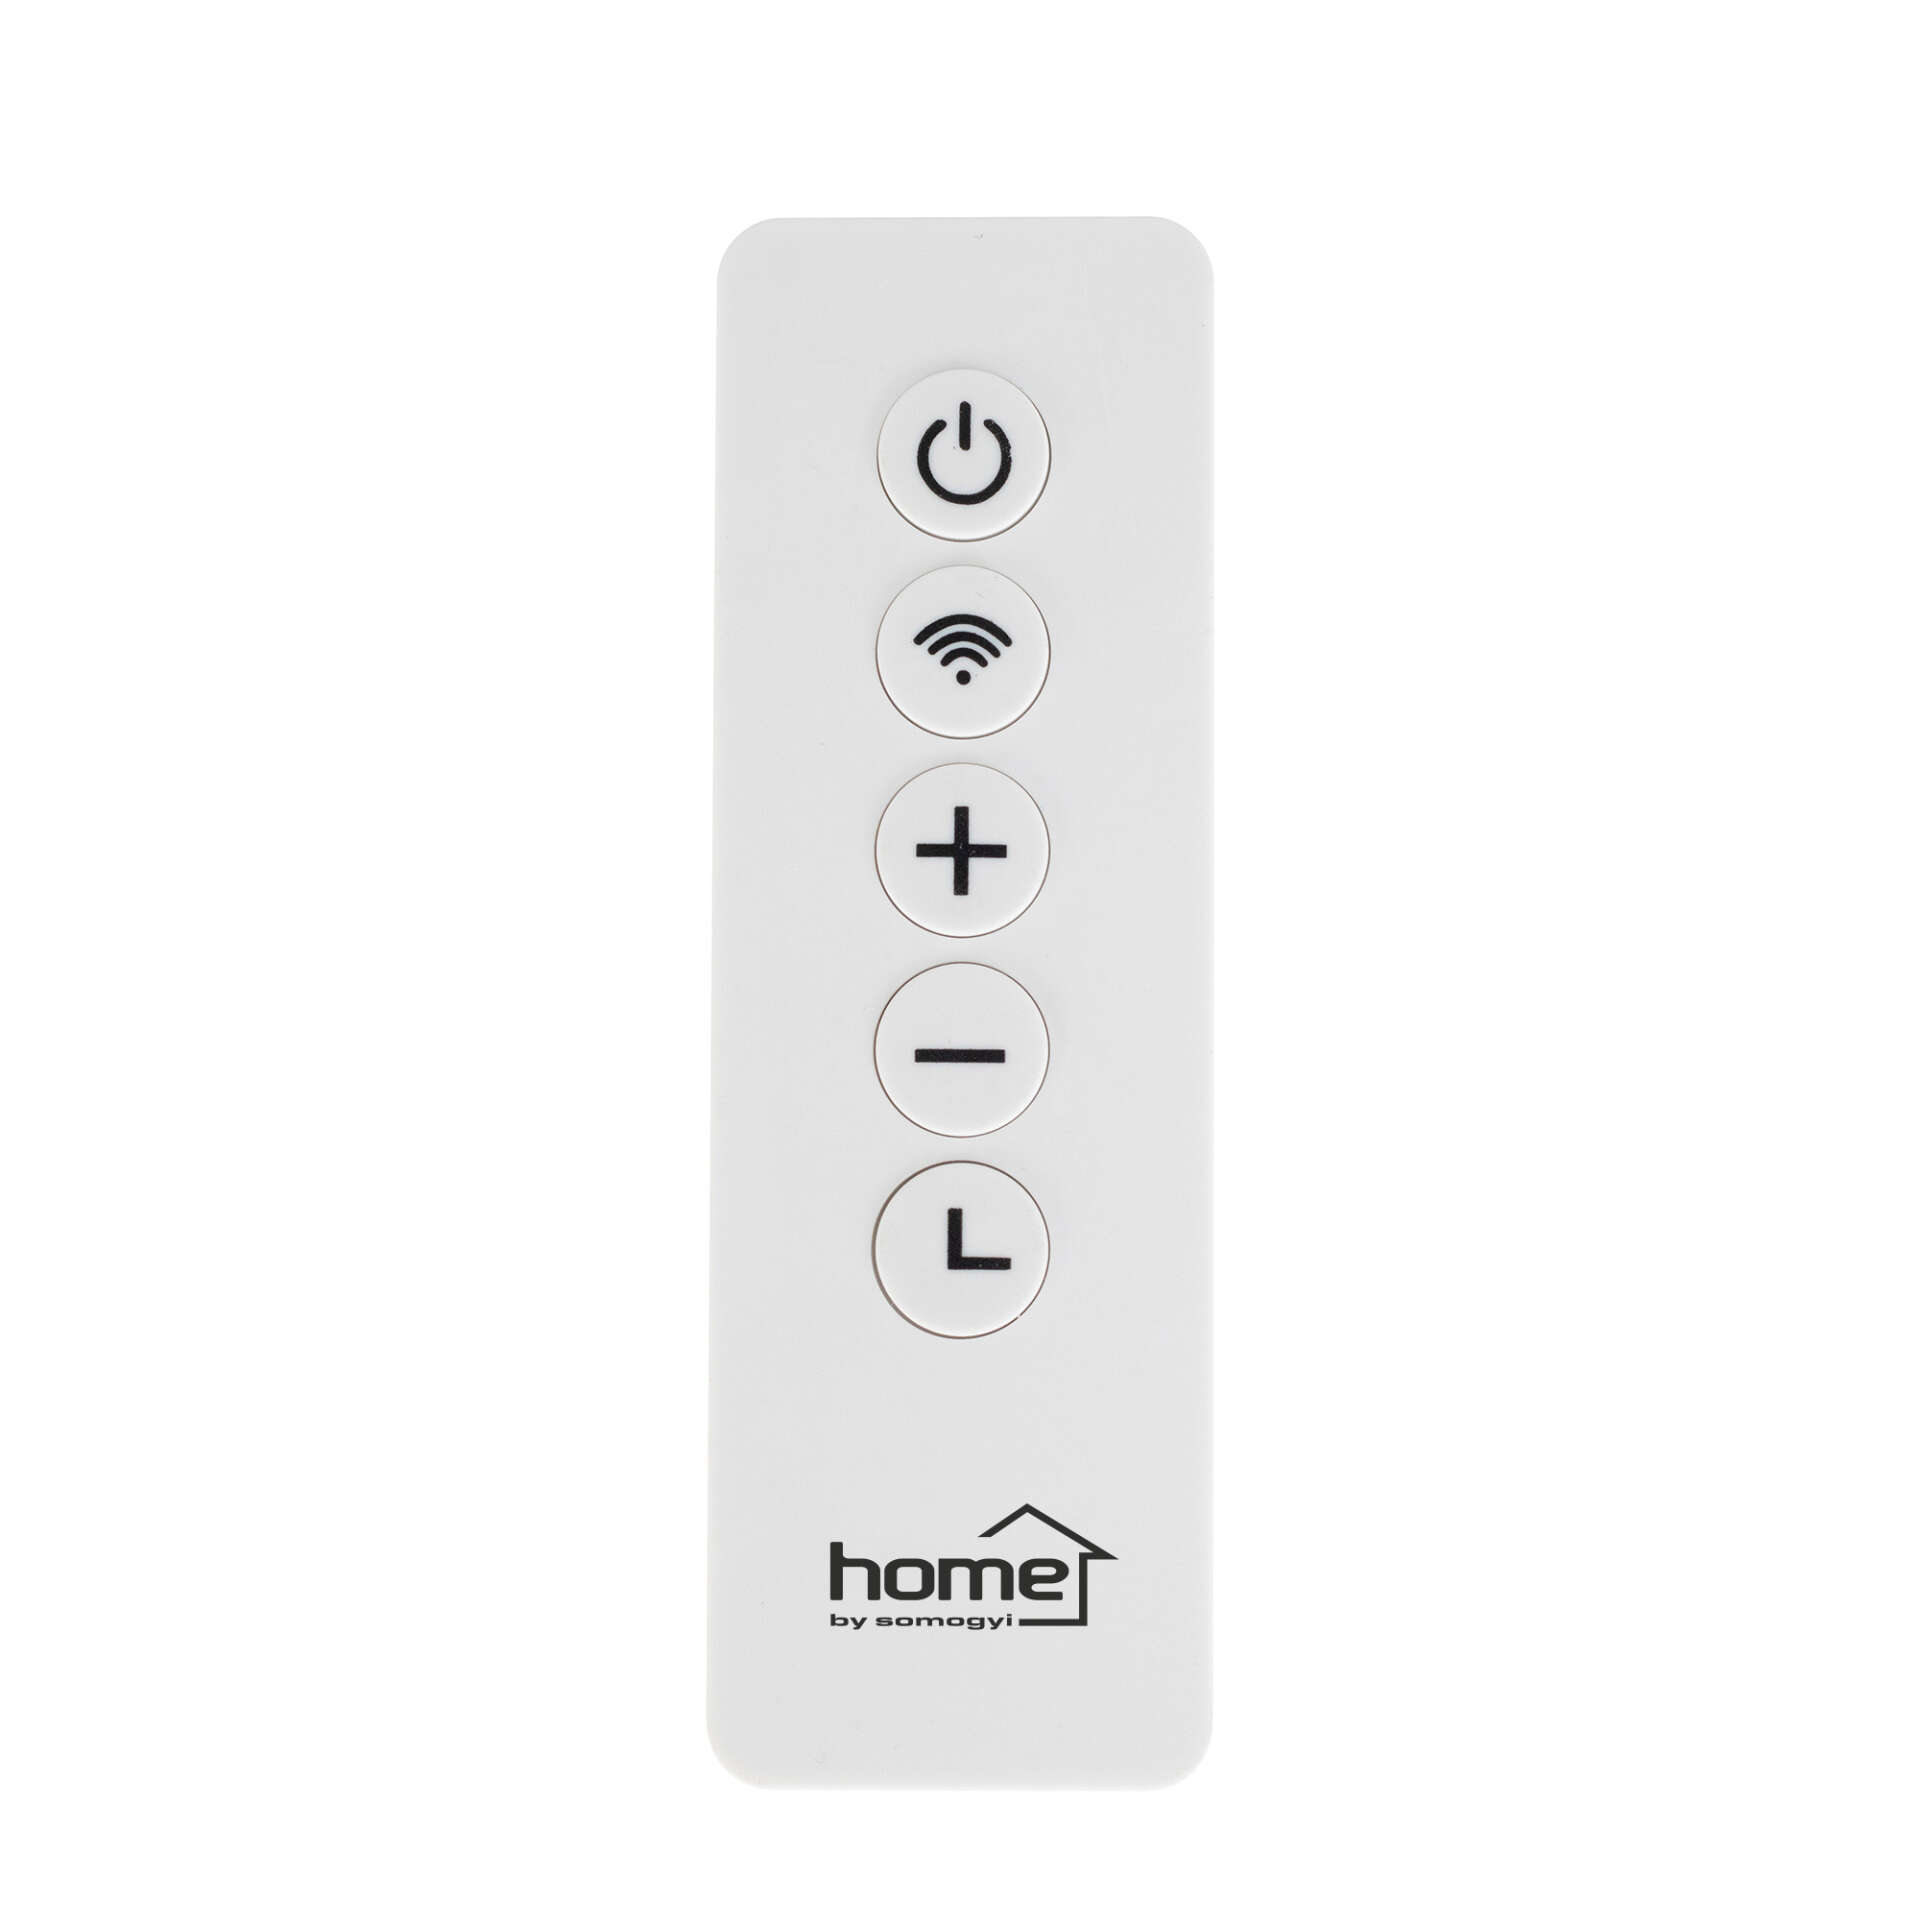 Home by somogyi home wifi smart infrapanel , hibrid fűtőtest - fk...